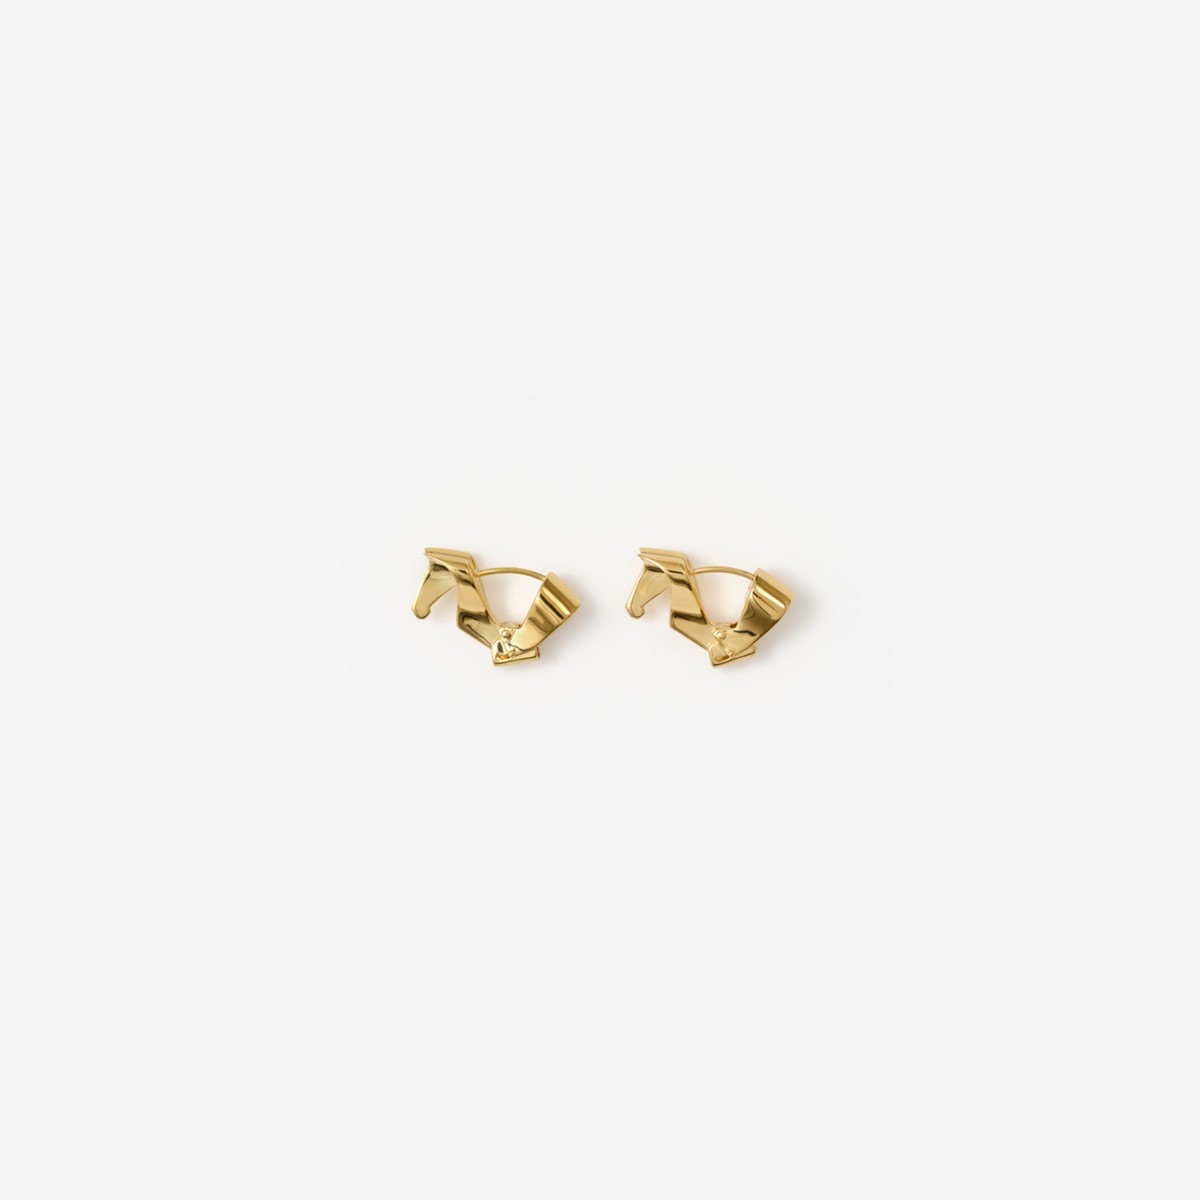 Burberry Gold-plated Horse Hoop Earrings